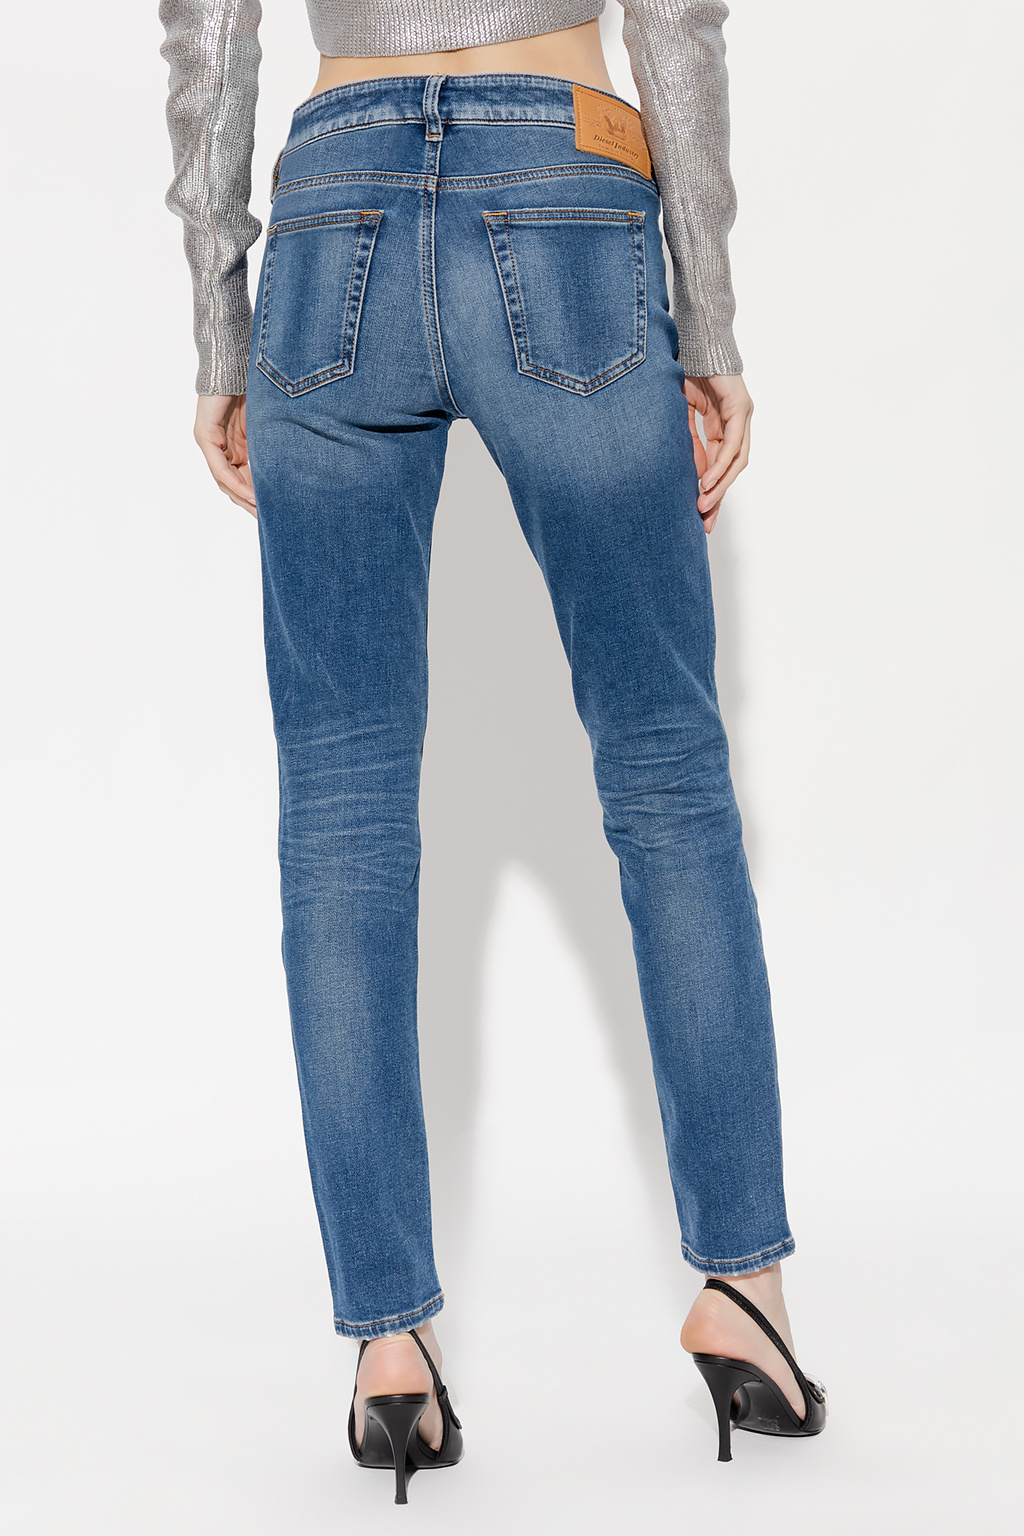 Diesel ‘D-OLLIES’ jeans | Women's Clothing | Vitkac